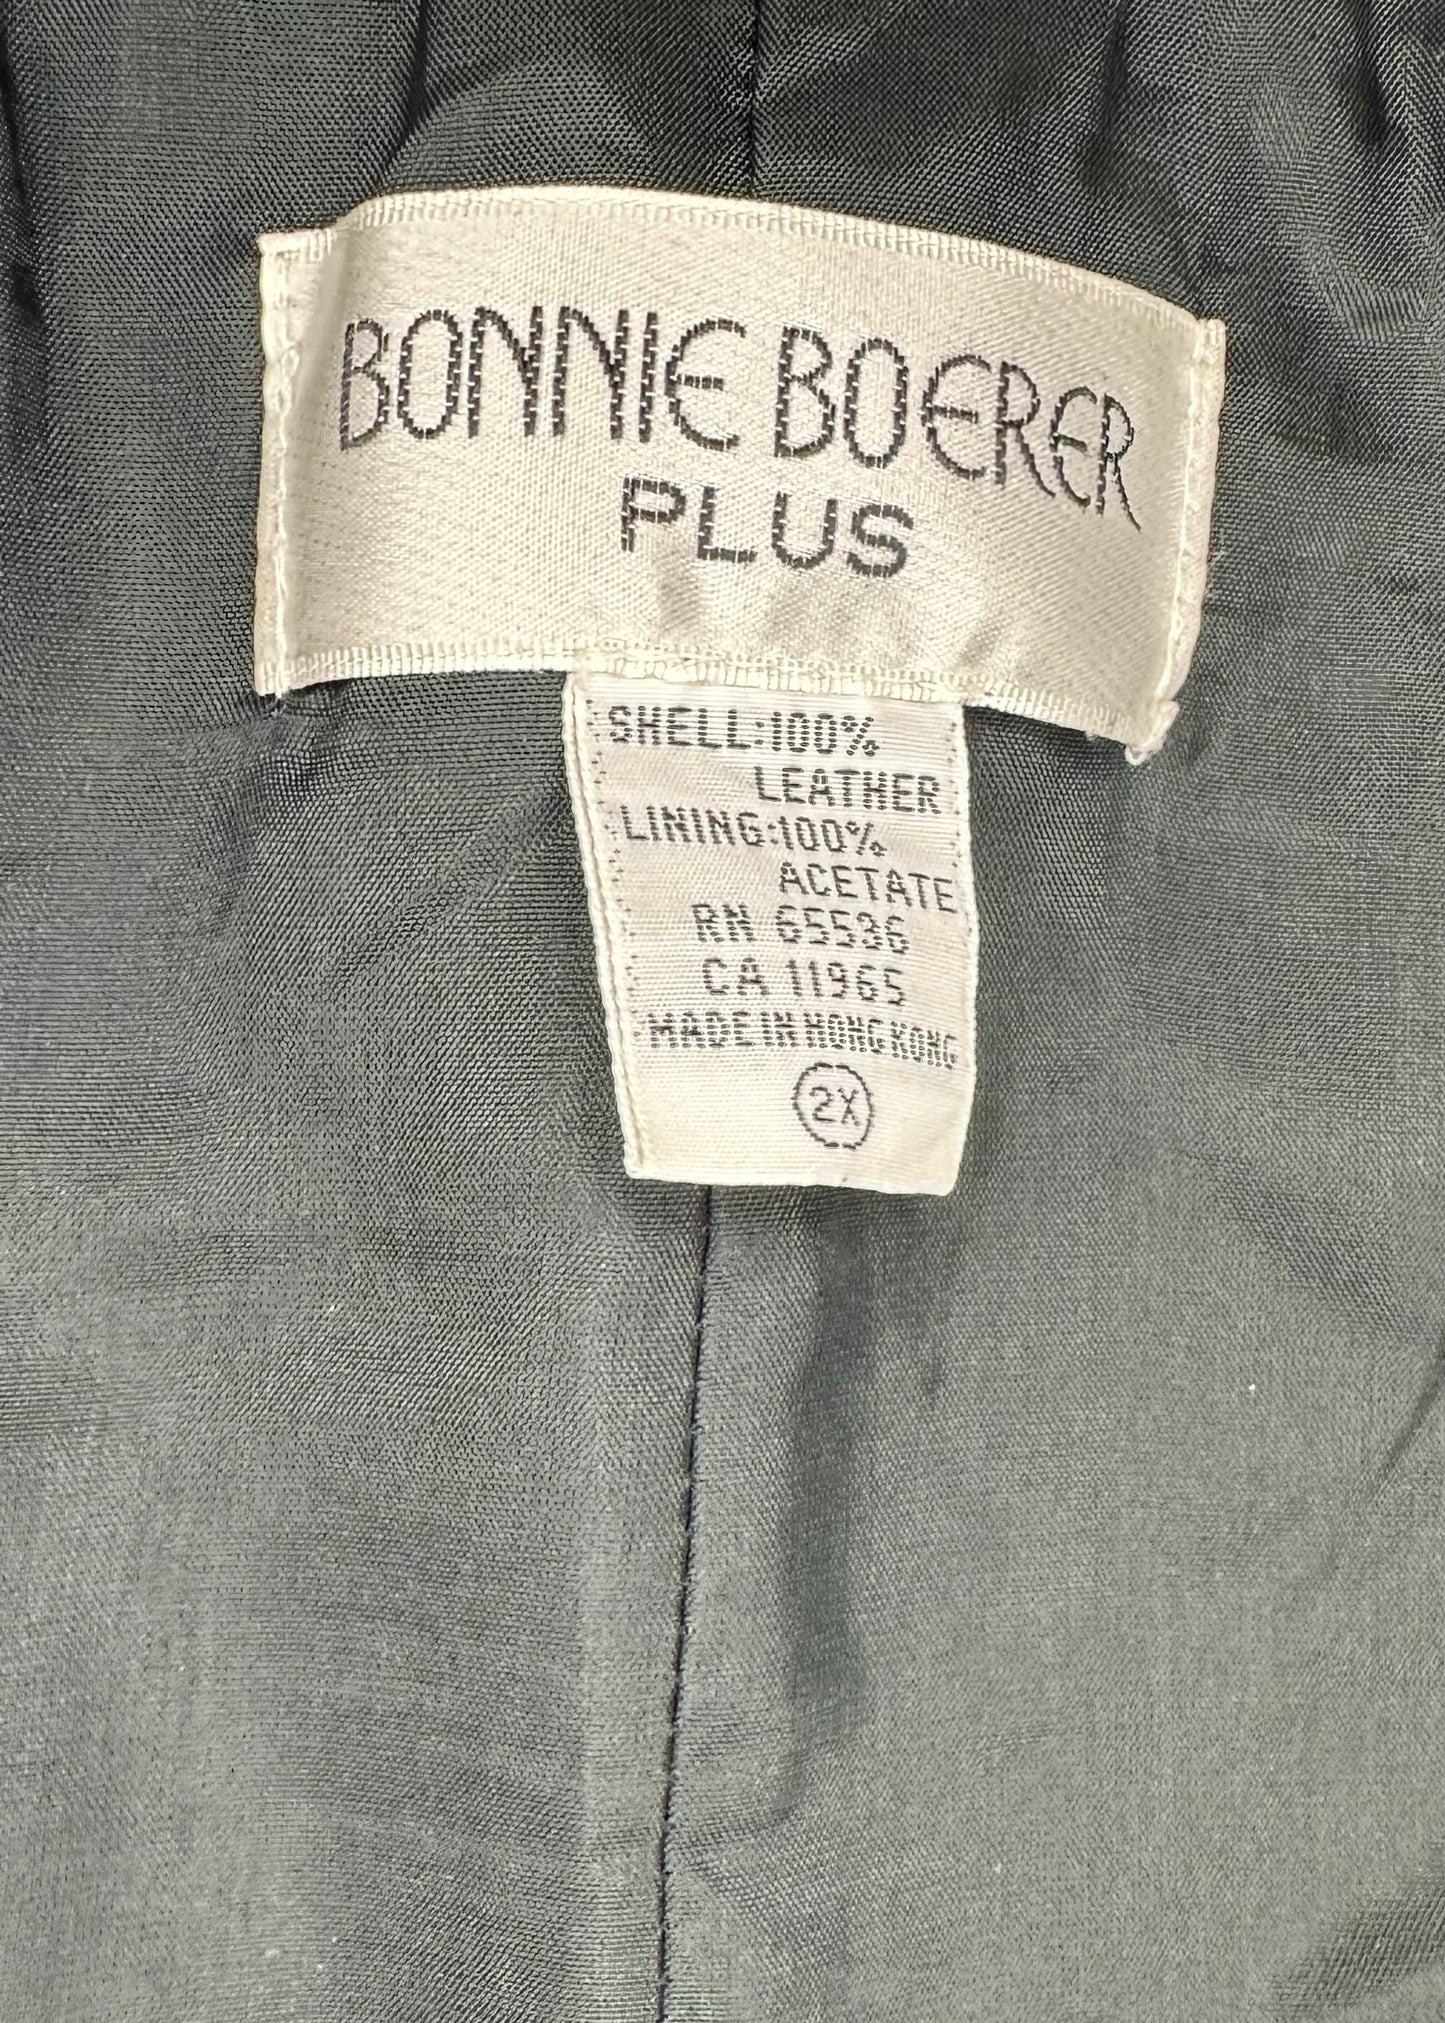 Vintage Leather Skirt by Bonnie Boerer